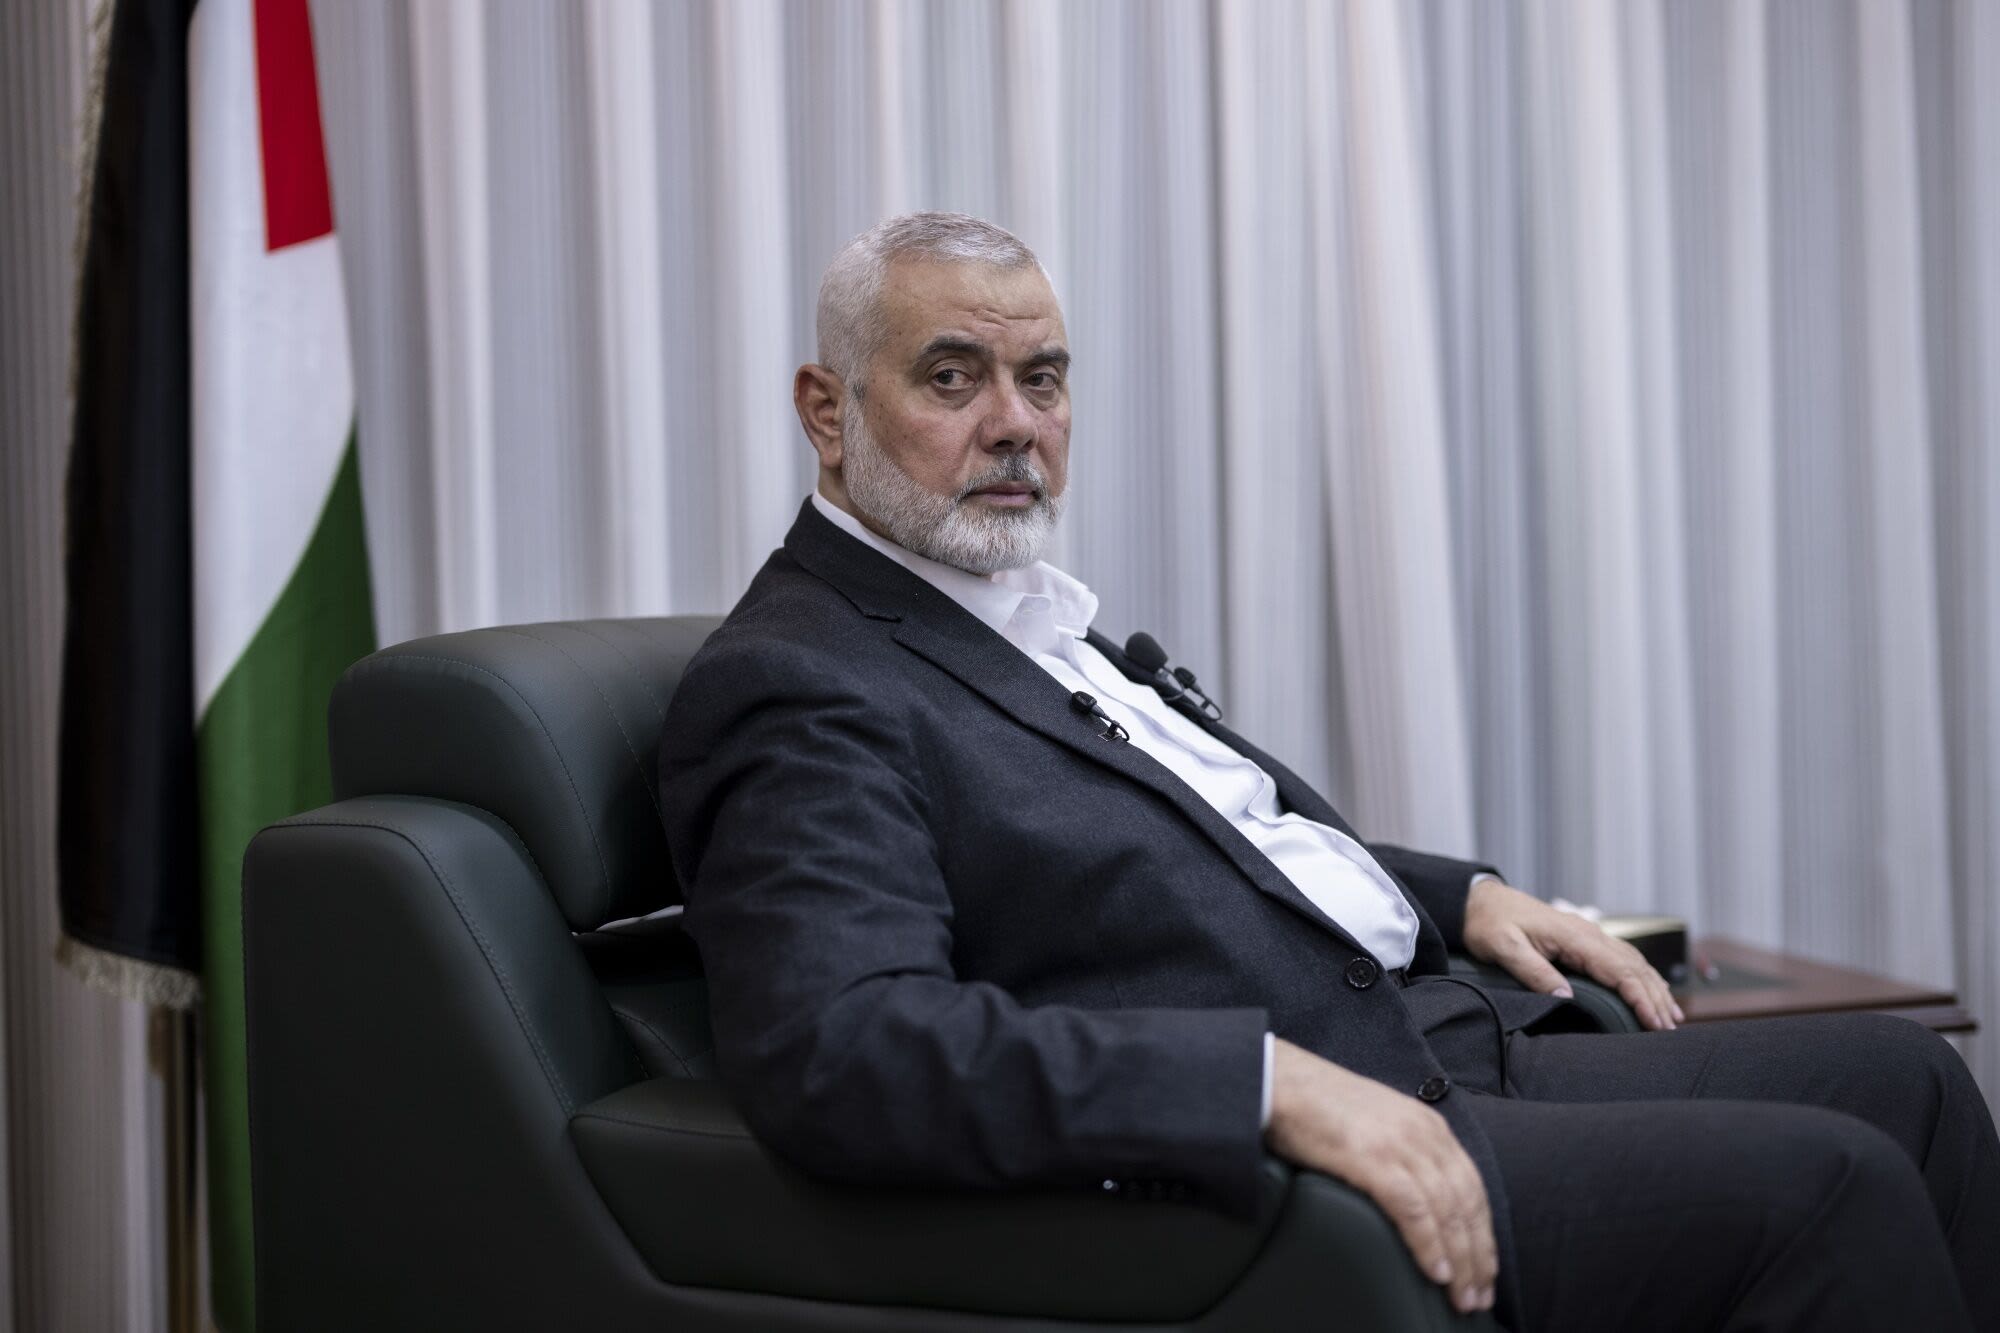 Hamas Says Israel Killed Political Leader With Airstrike on Iran